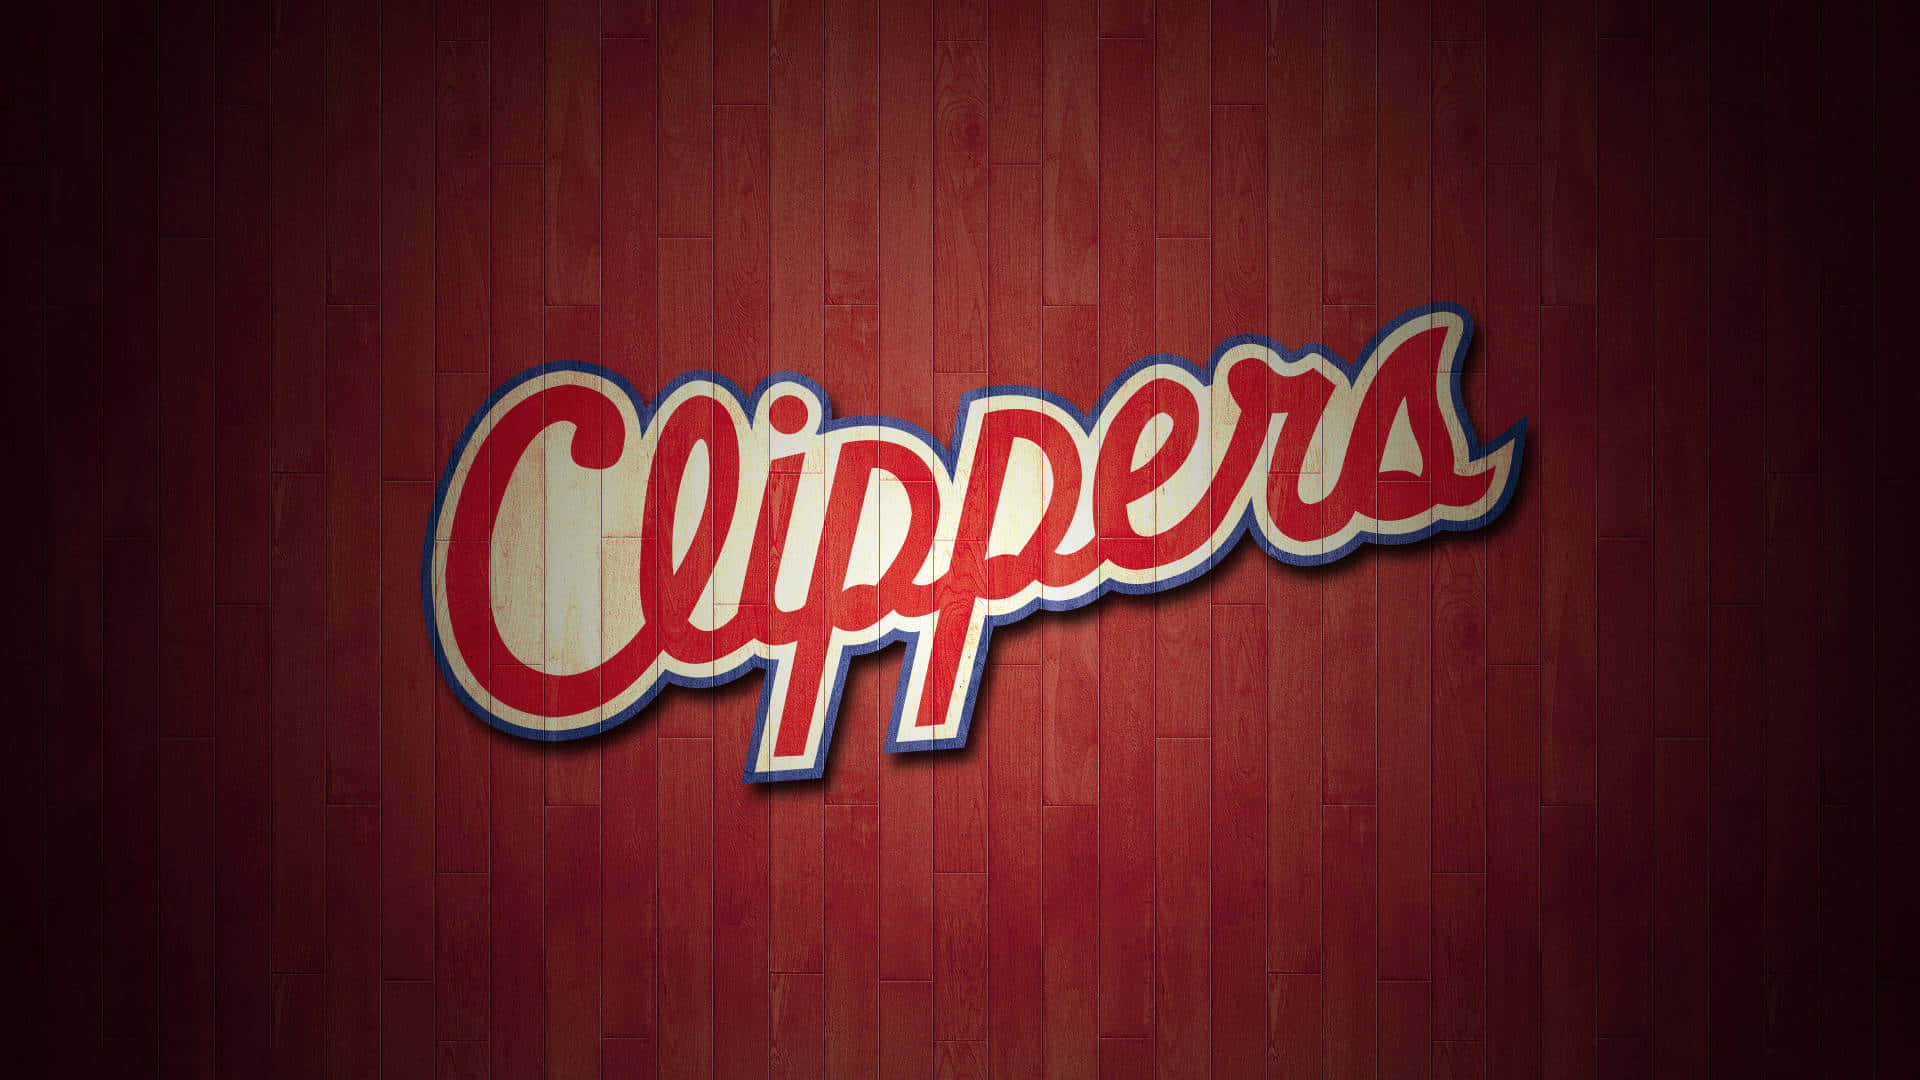 Equipode Baloncesto Rojo La Clippers Tipografía Fondo de pantalla